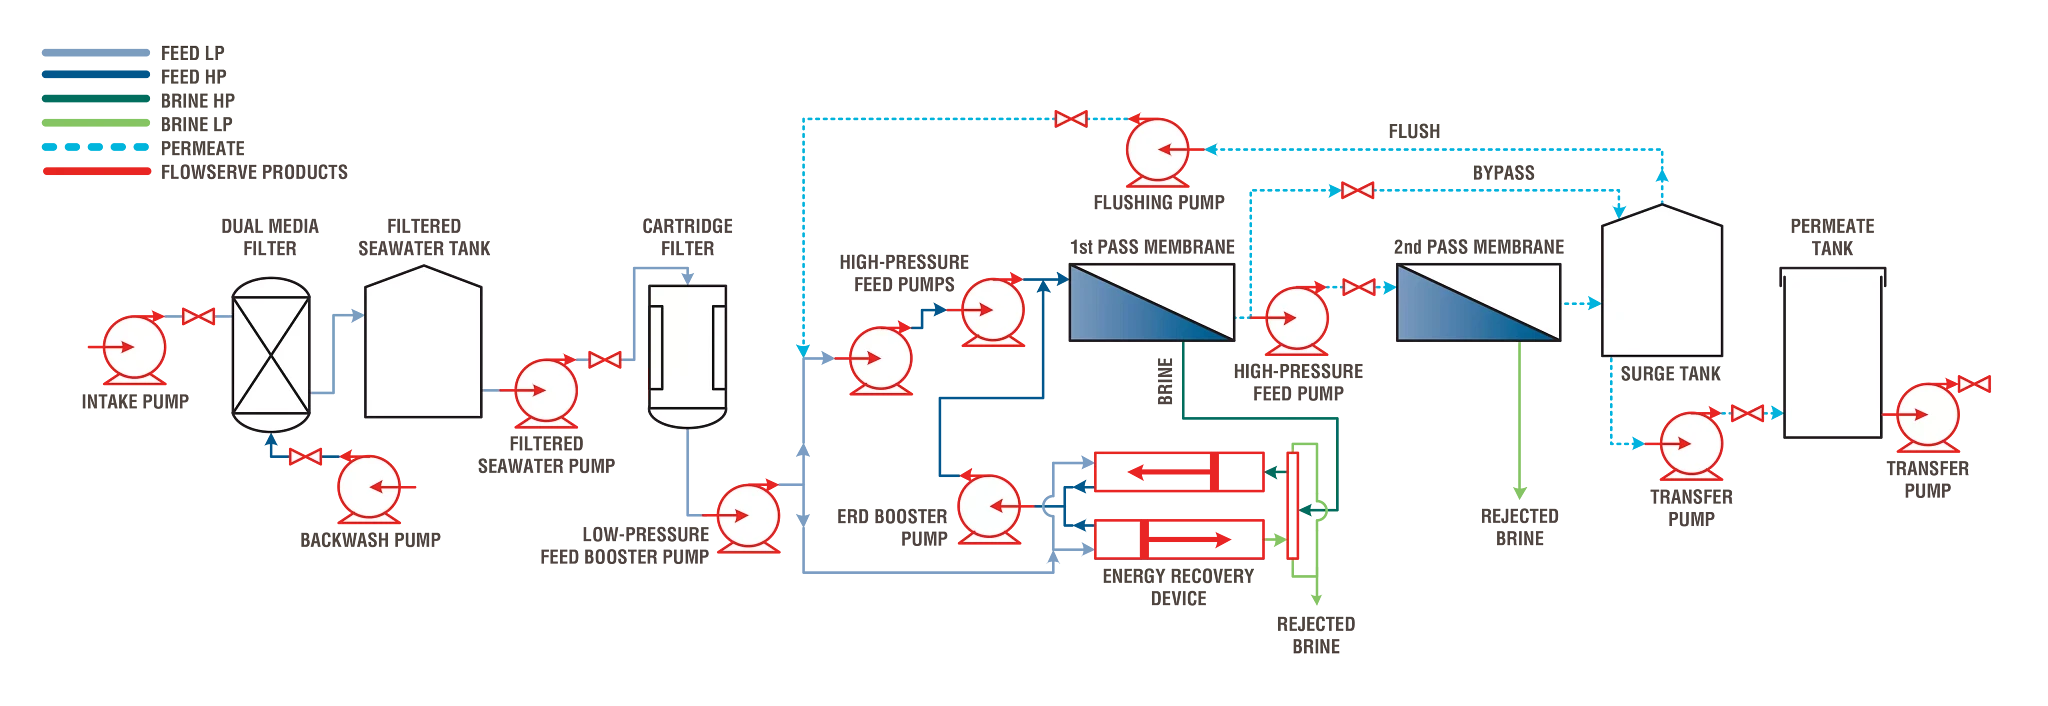 SWRO海水淡化厂流程控制图。